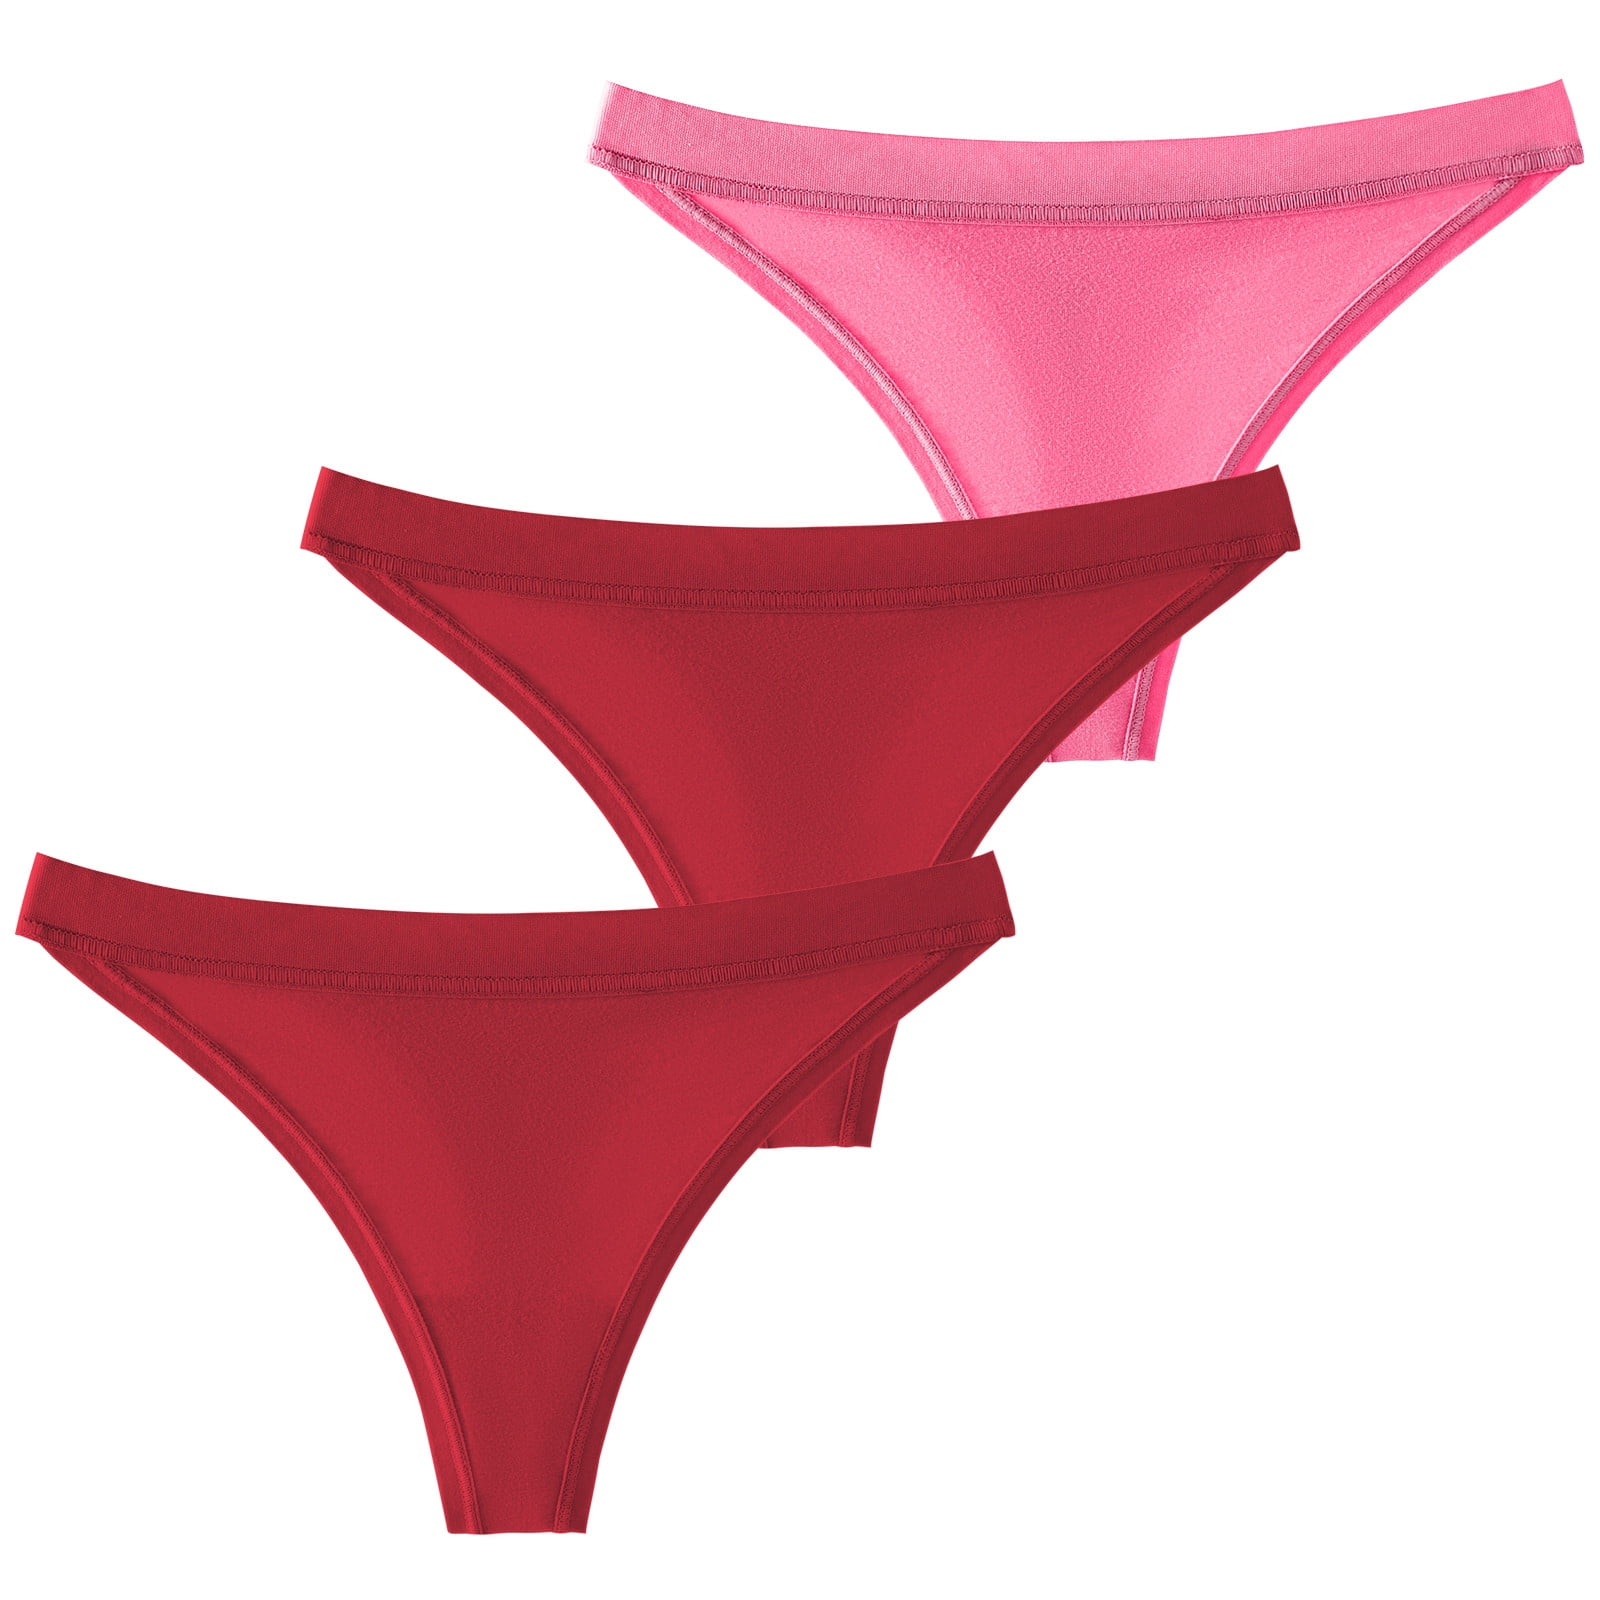 nsendm Female Underpants Adult Ladies Underwear Cotton Boy Shorts  Underpants Patchwork Color Underwear Panties Bikini Solid Womens Briefs  Lane(Red, M) 